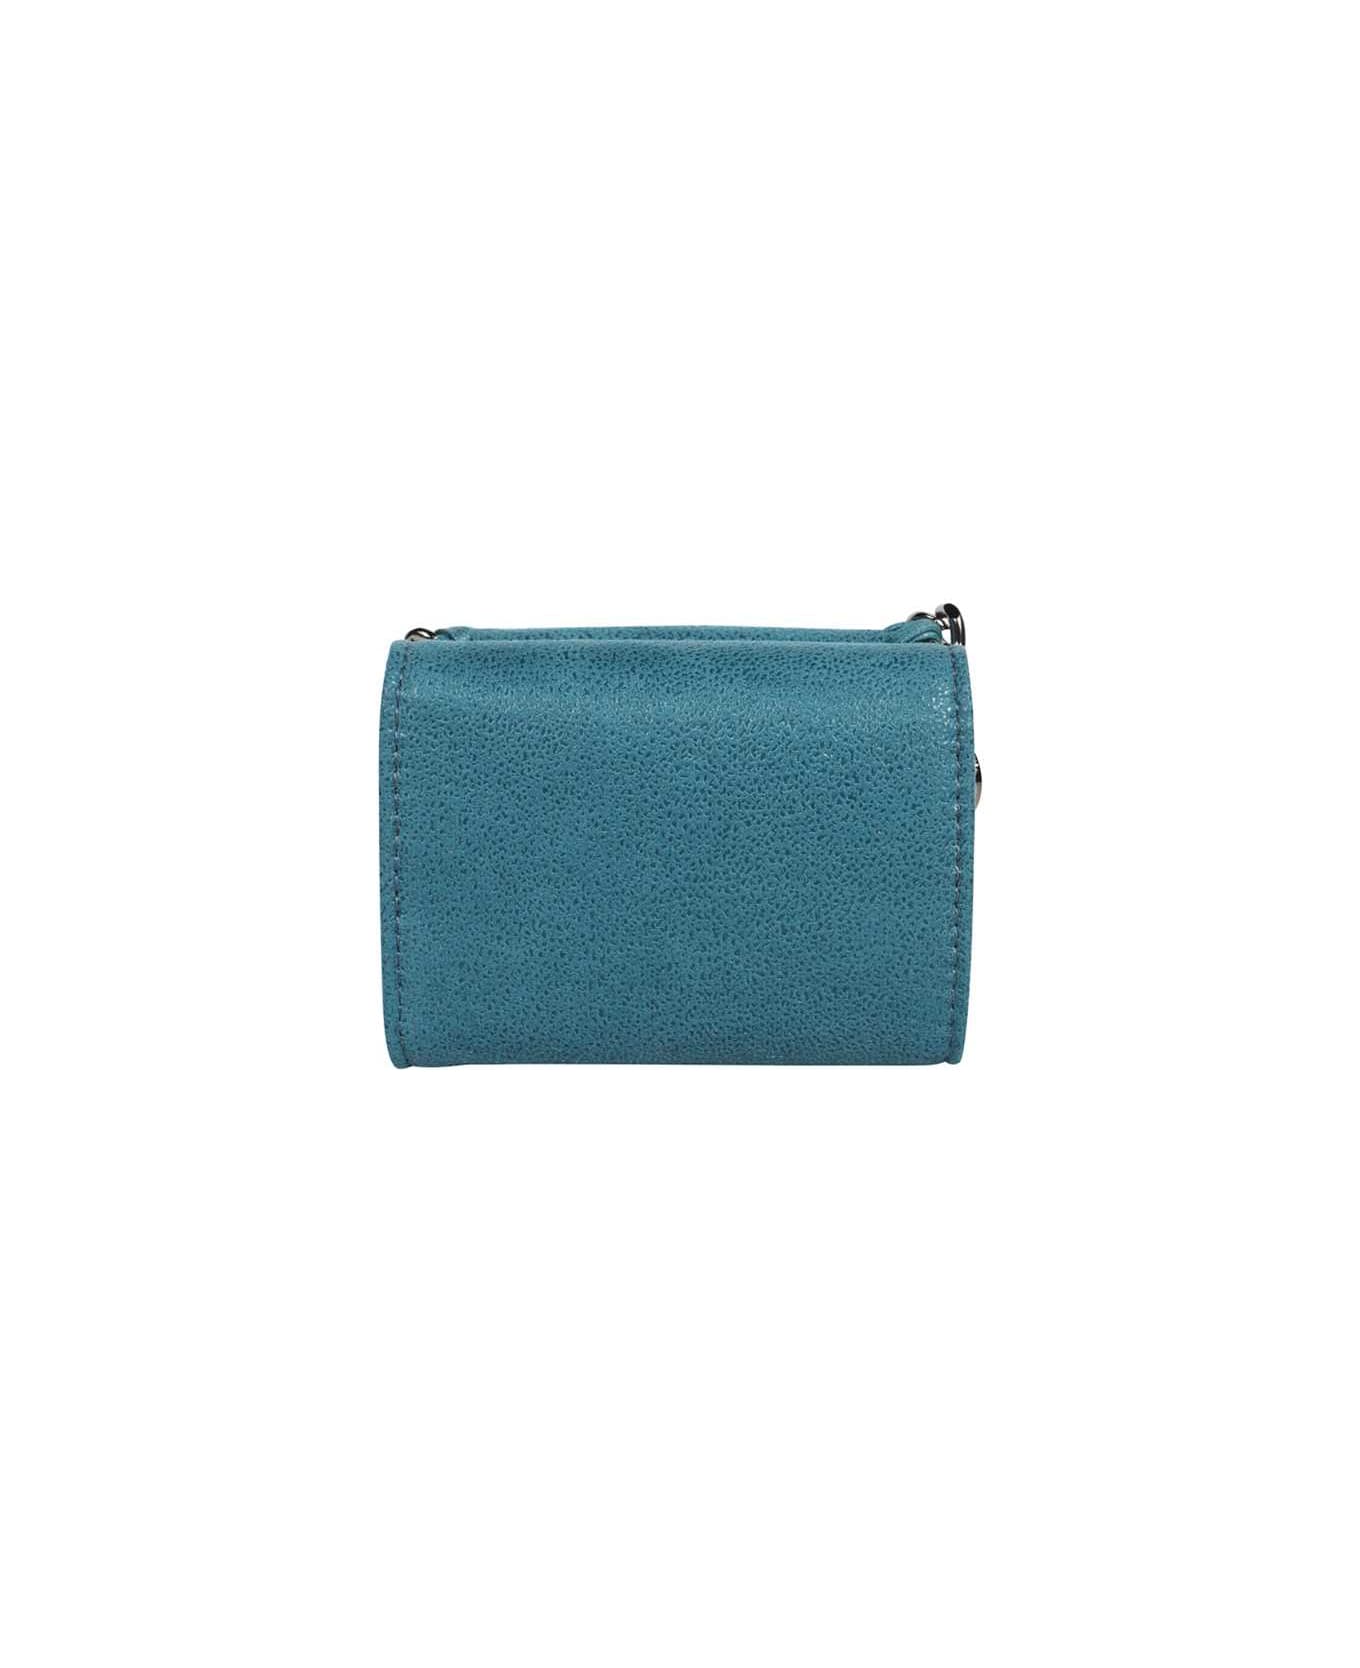 Stella McCartney Falabella Small Wallet - turquoise